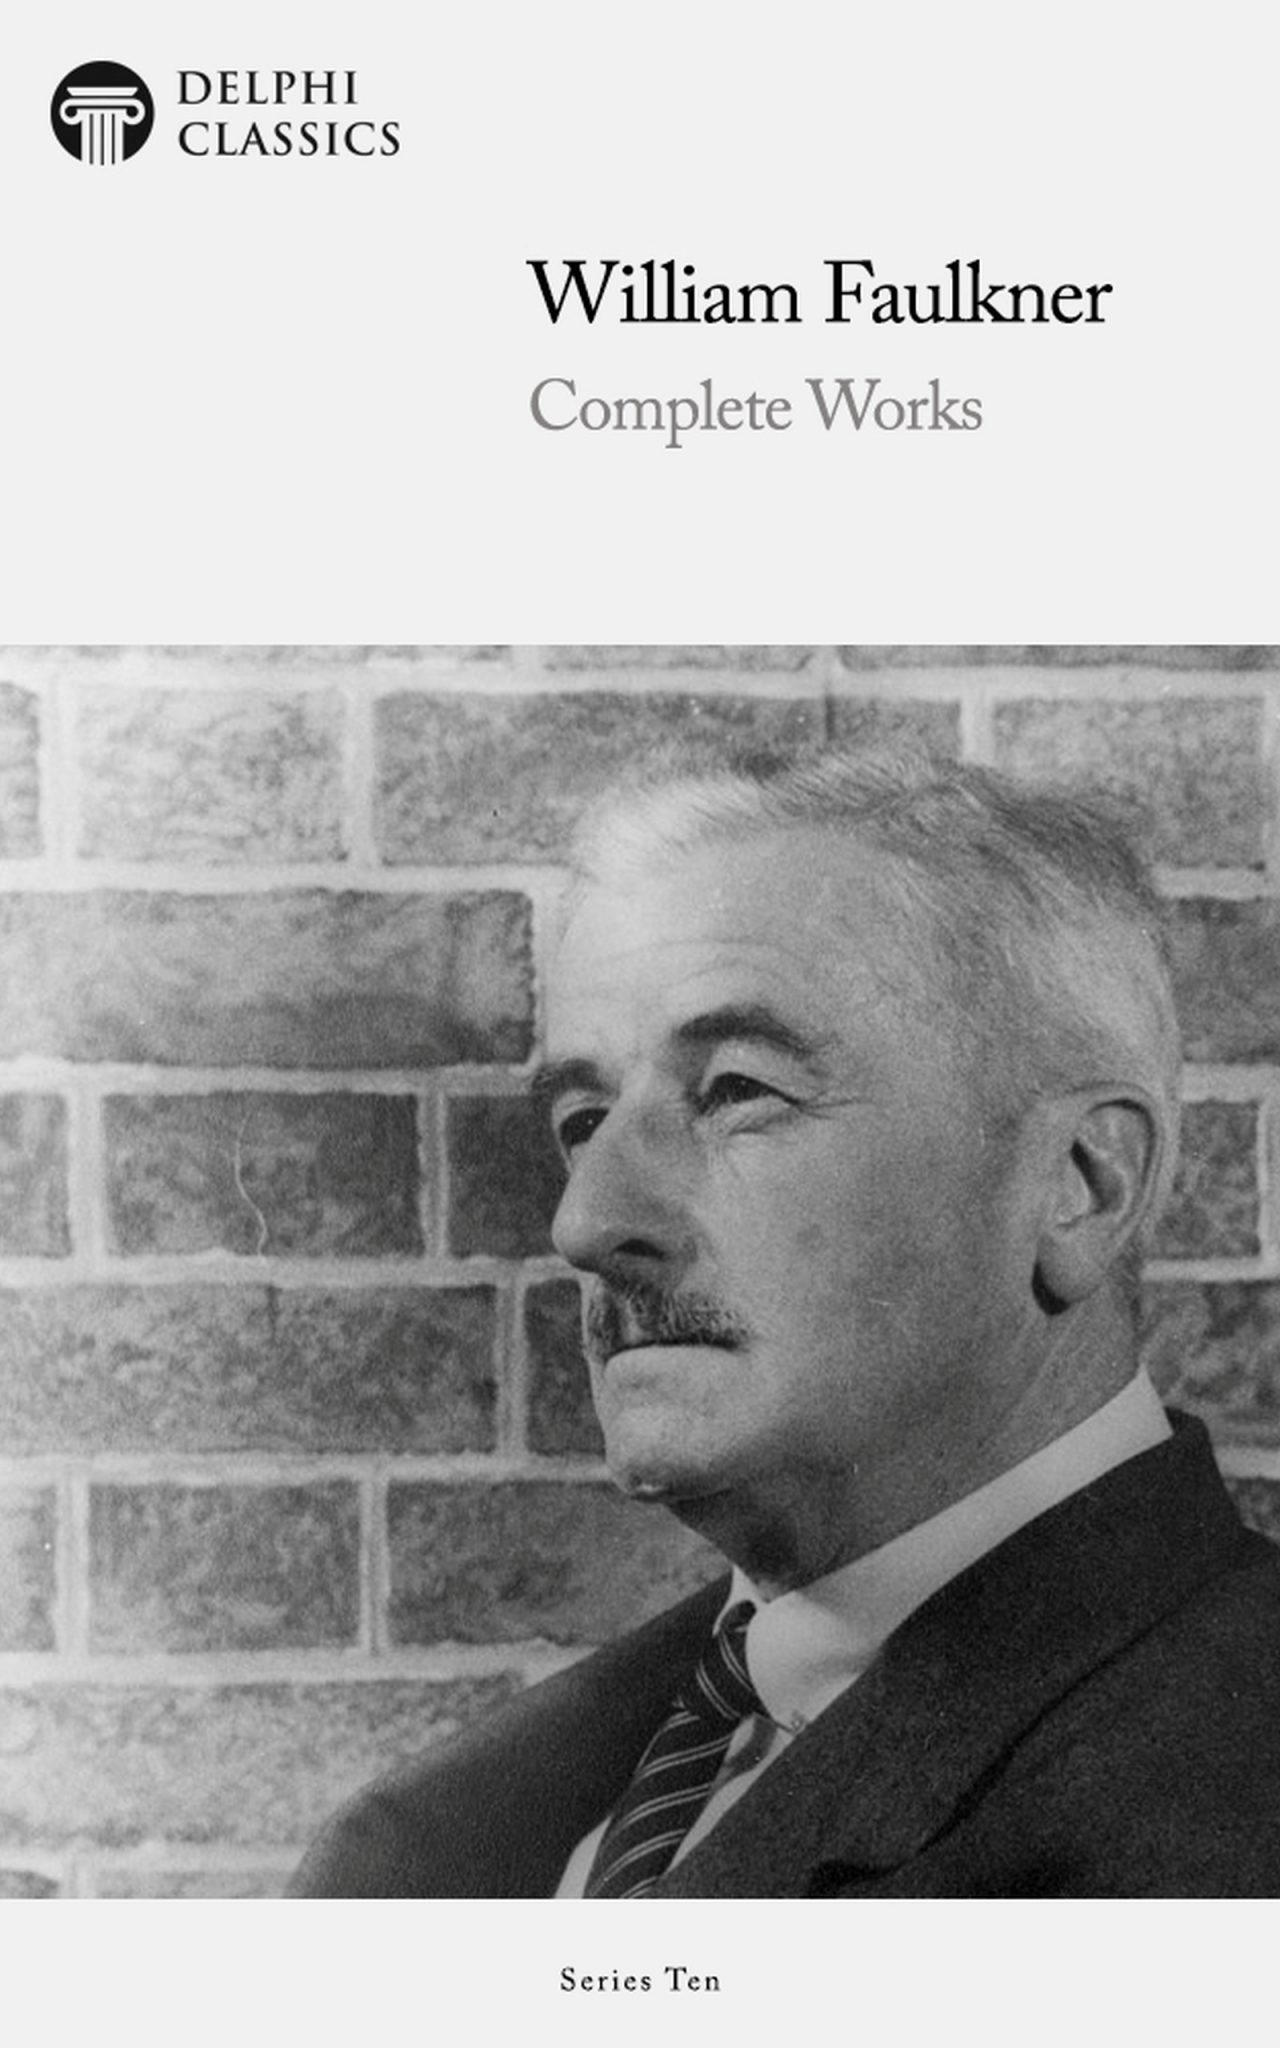 William Faulkner by Frederick R. Karl